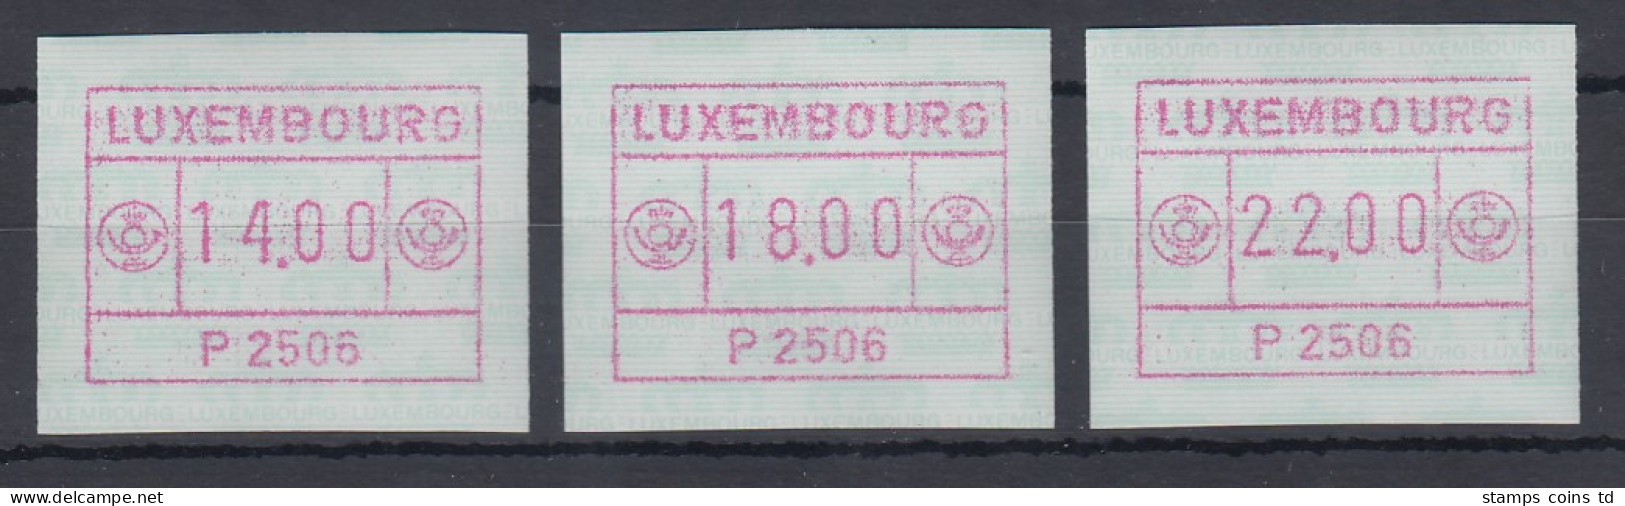 Luxemburg ATM P2506 Tastensatz 14-18-22 **   - Vignettes D'affranchissement